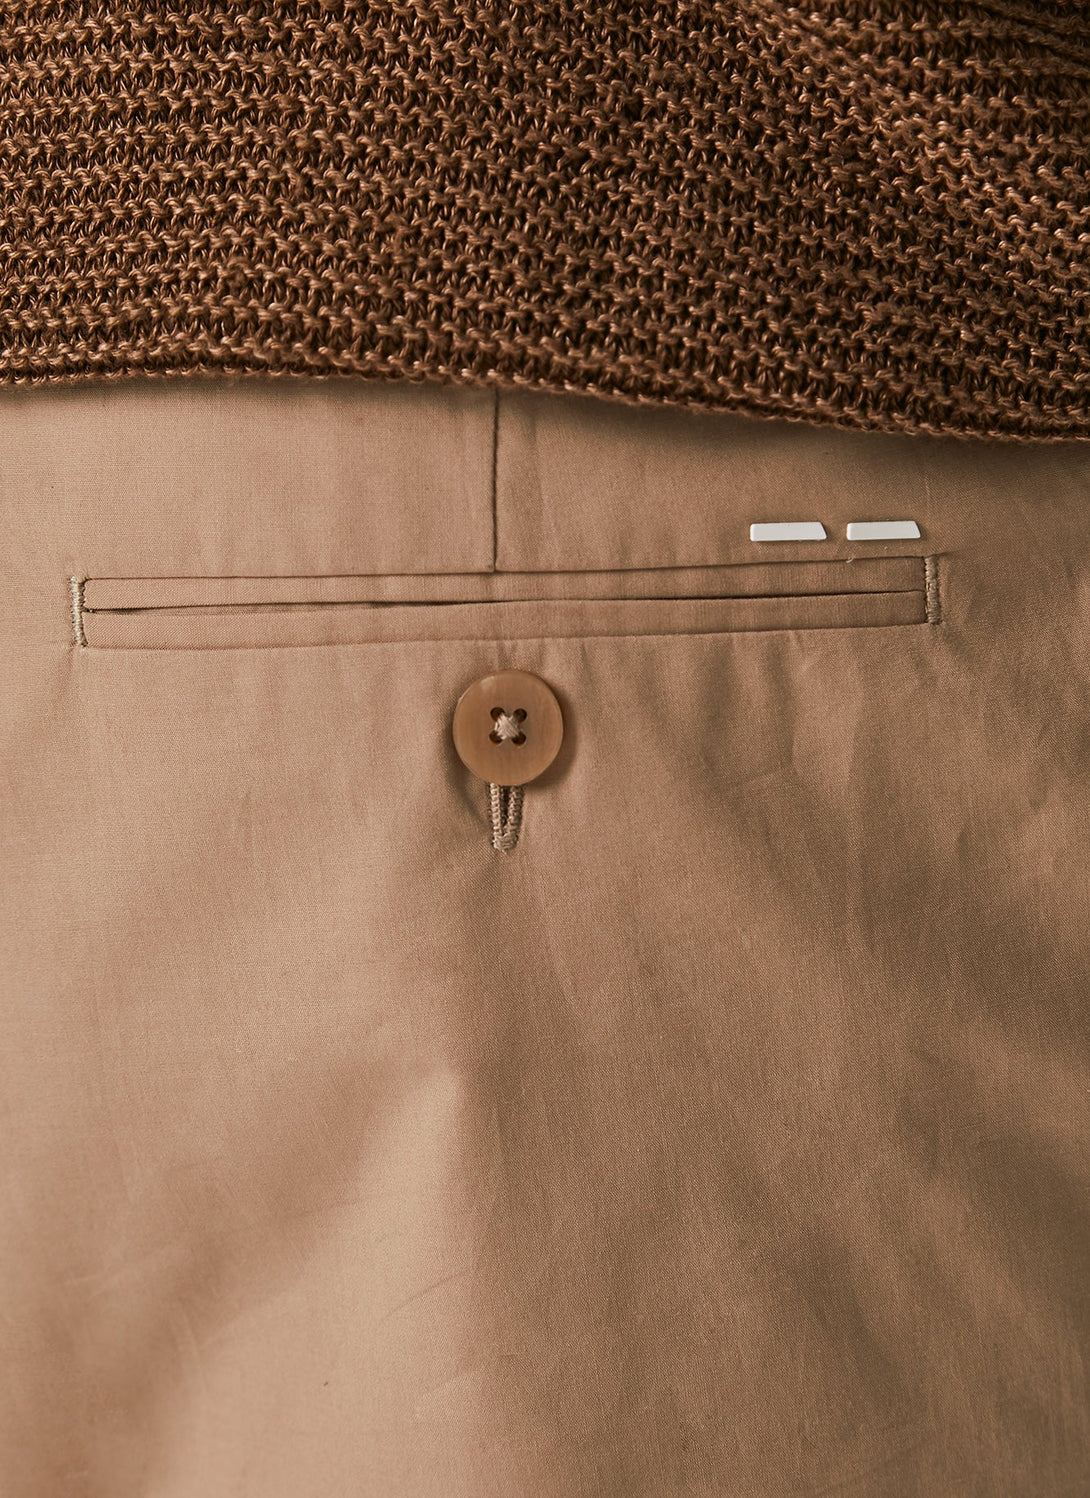 Men Shorts | Beige Short by Spanish designer Adolfo Dominguez